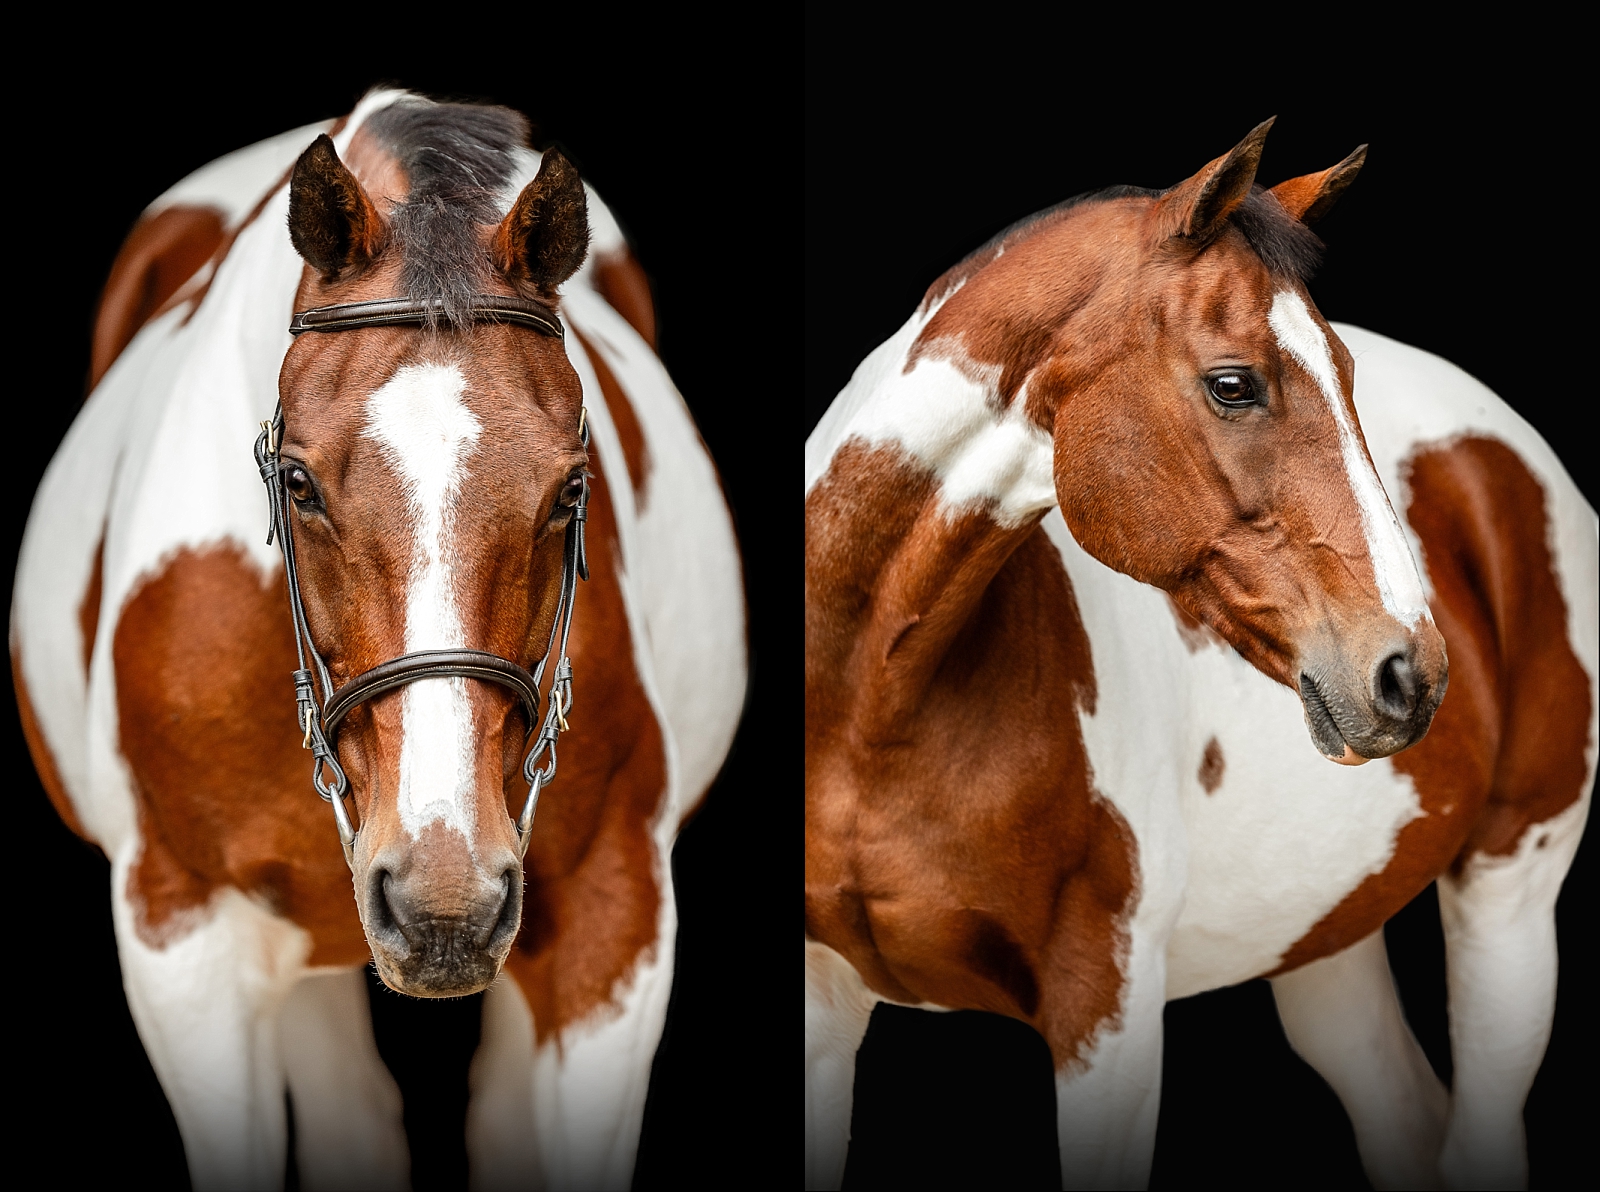 Horse photographer near Auburn, Alabama. Paint horse. Fine Art photos of horses. Black background horse photo.